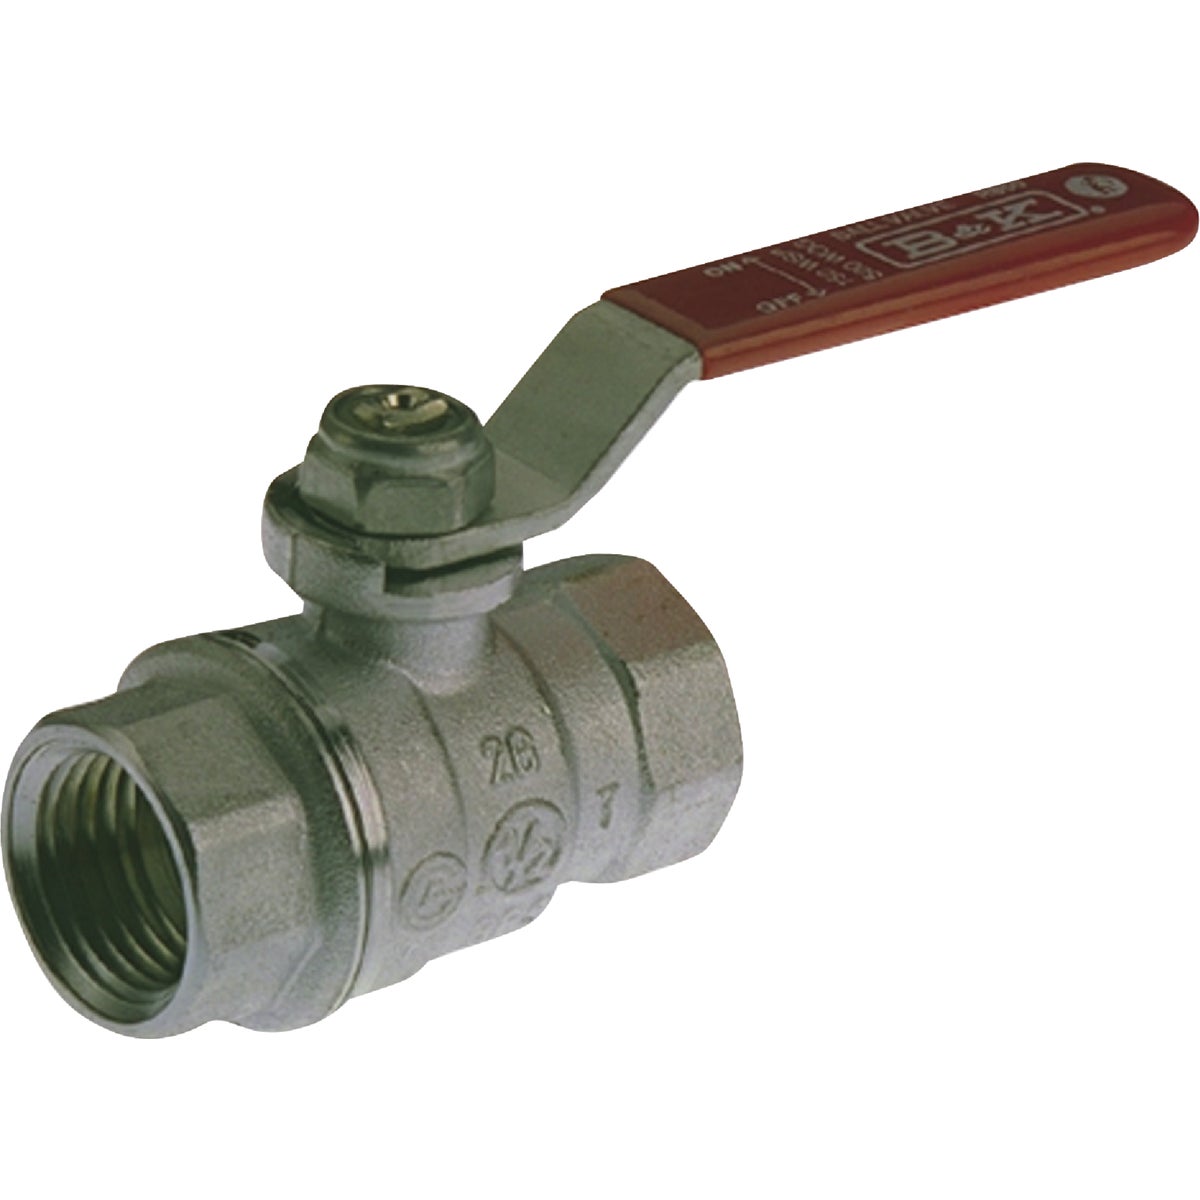 Item 459685, Forged brass chrome-plated full port ball valve F.I.P. 600 P.S.I.